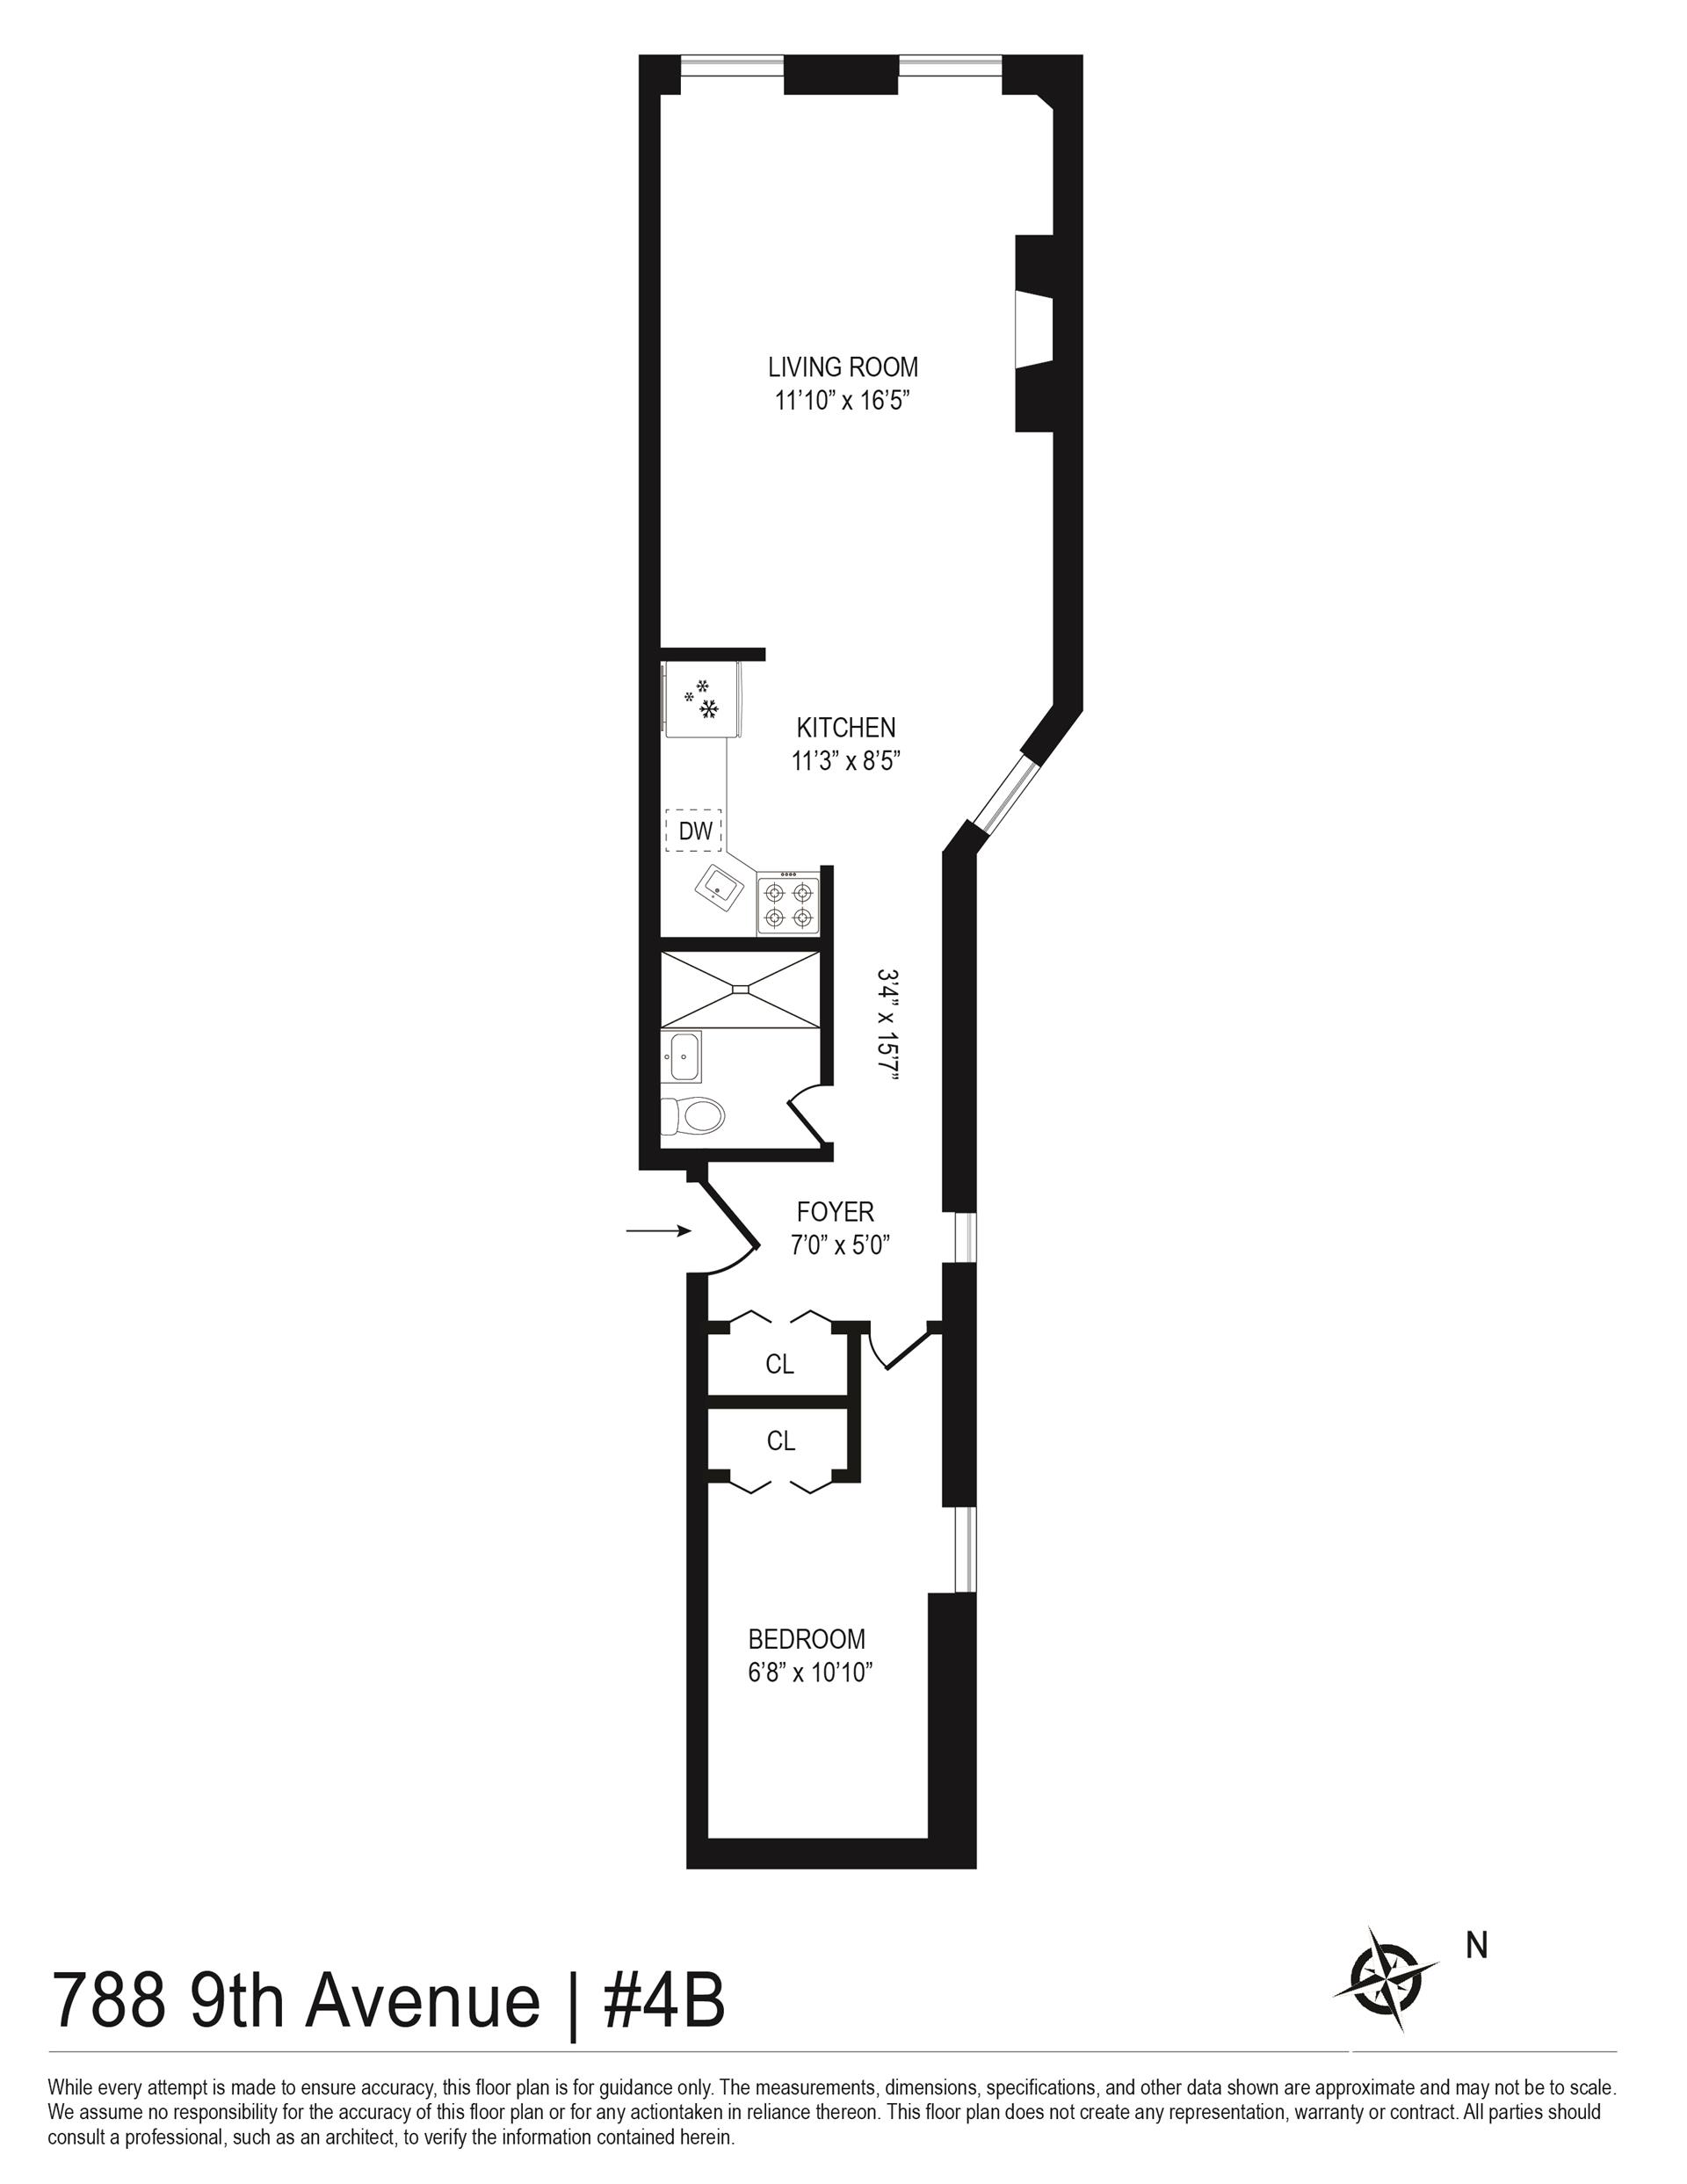 Floorplan for 788 9th Avenue, 4B